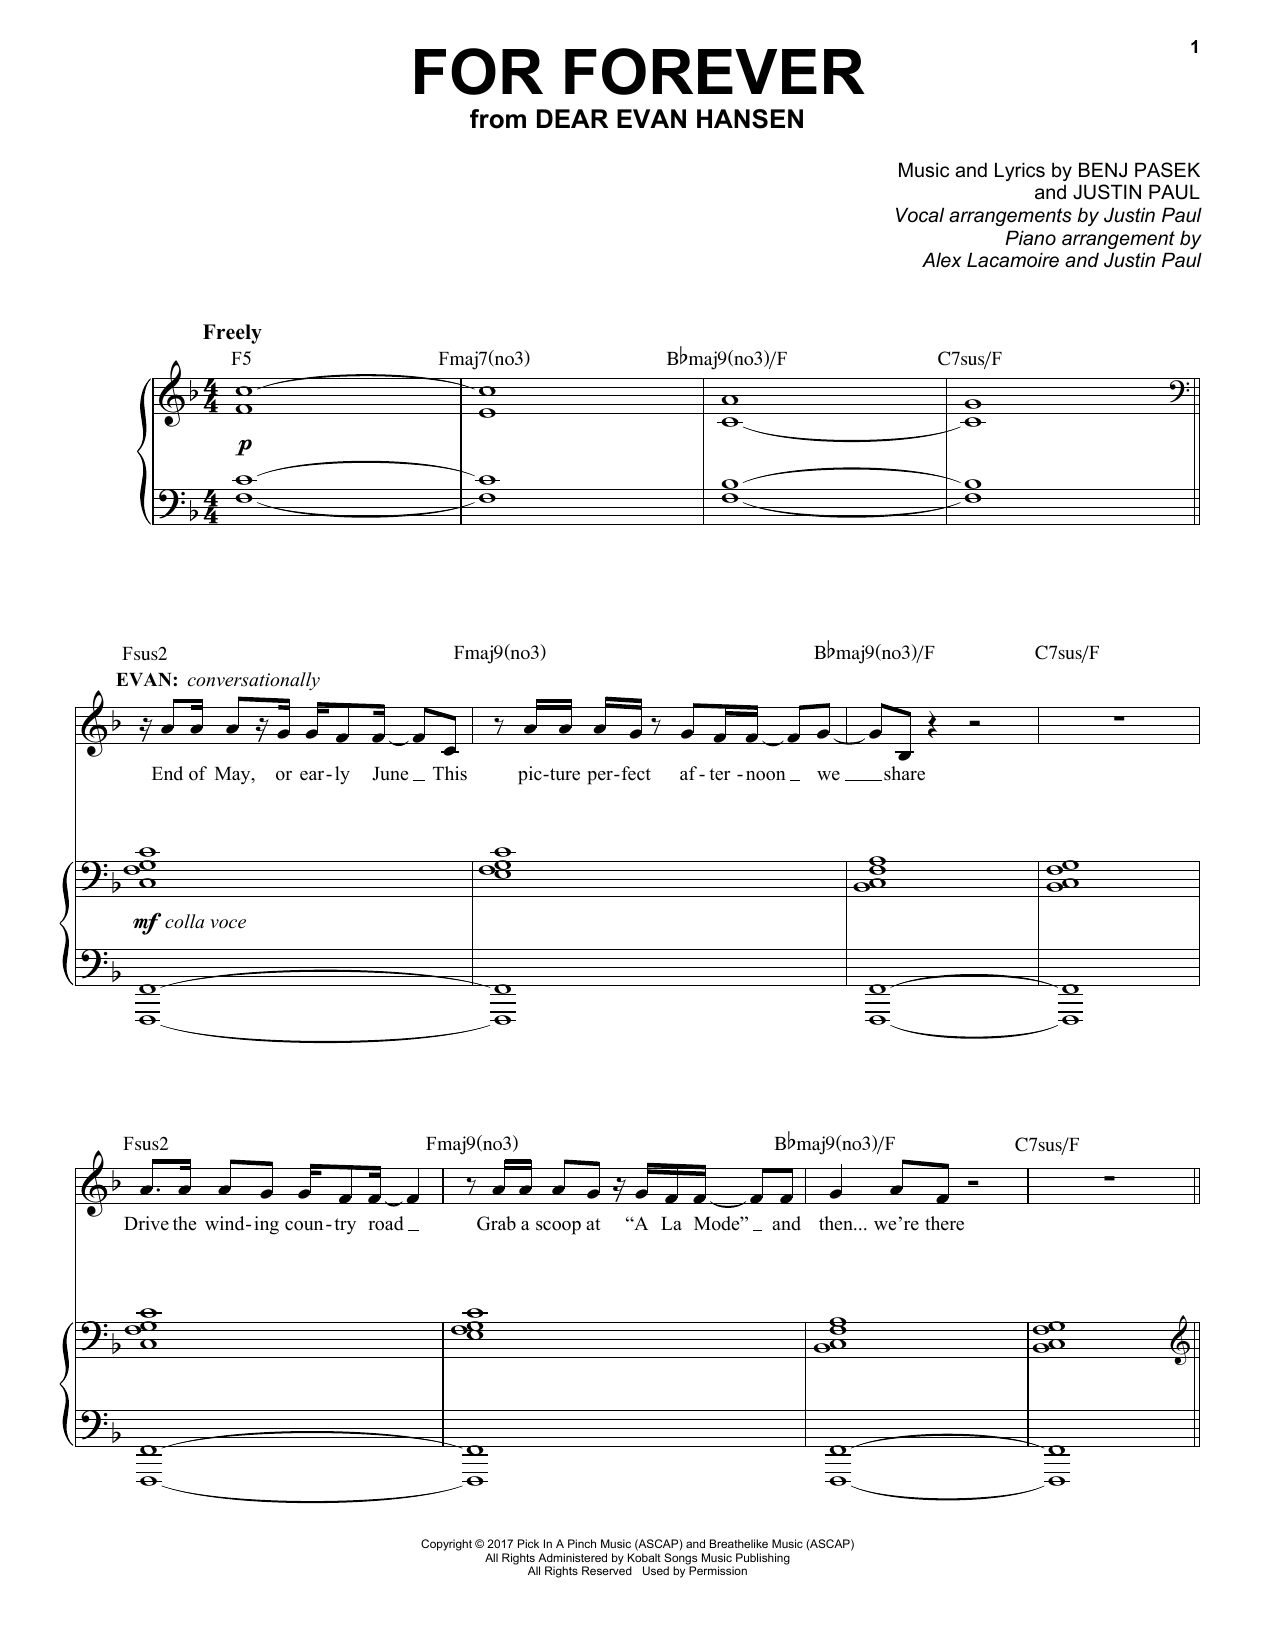 Pasek & Paul For Forever (from Dear Evan Hansen) Sheet Music Notes & Chords for Guitar Chords/Lyrics - Download or Print PDF